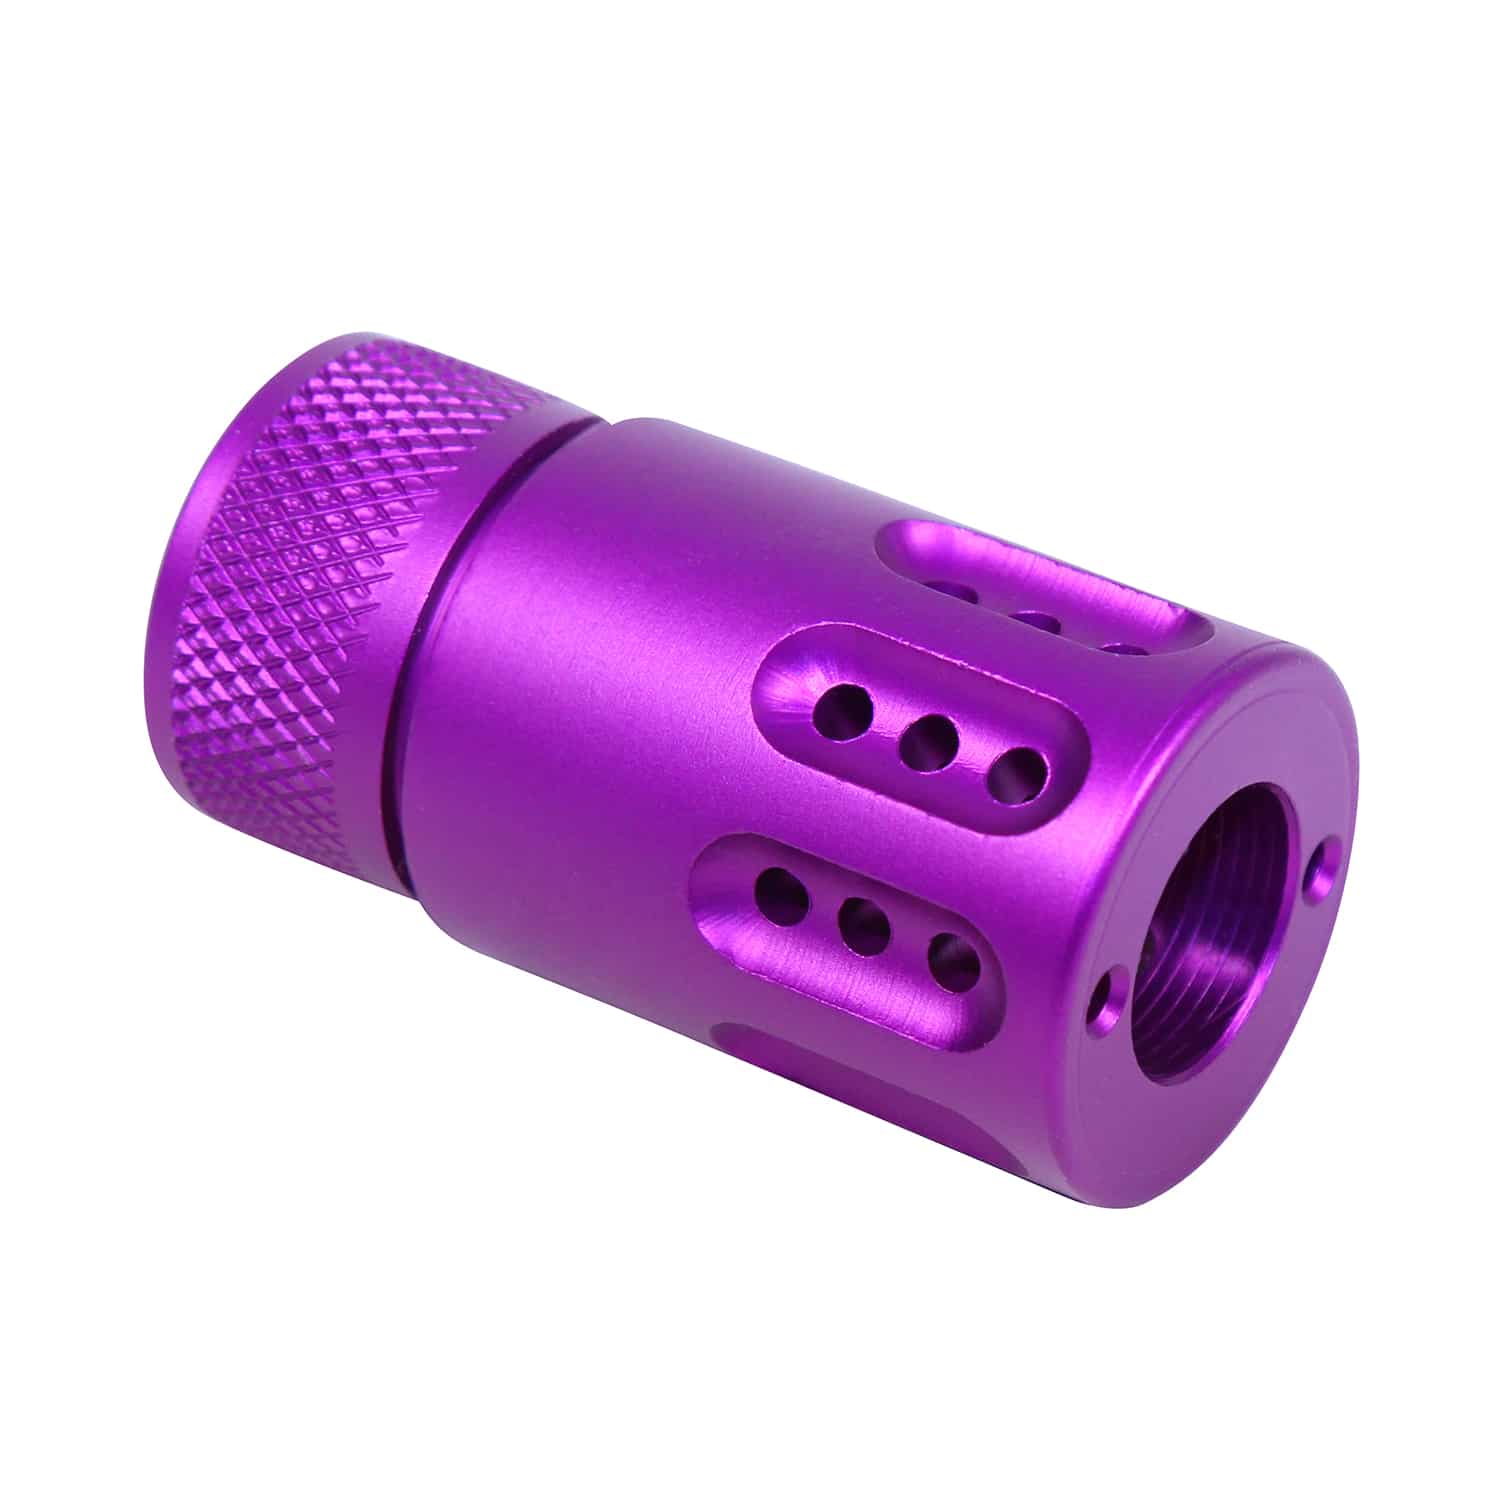 Anodized purple AR .308 mini muzzle brake with barrel shroud